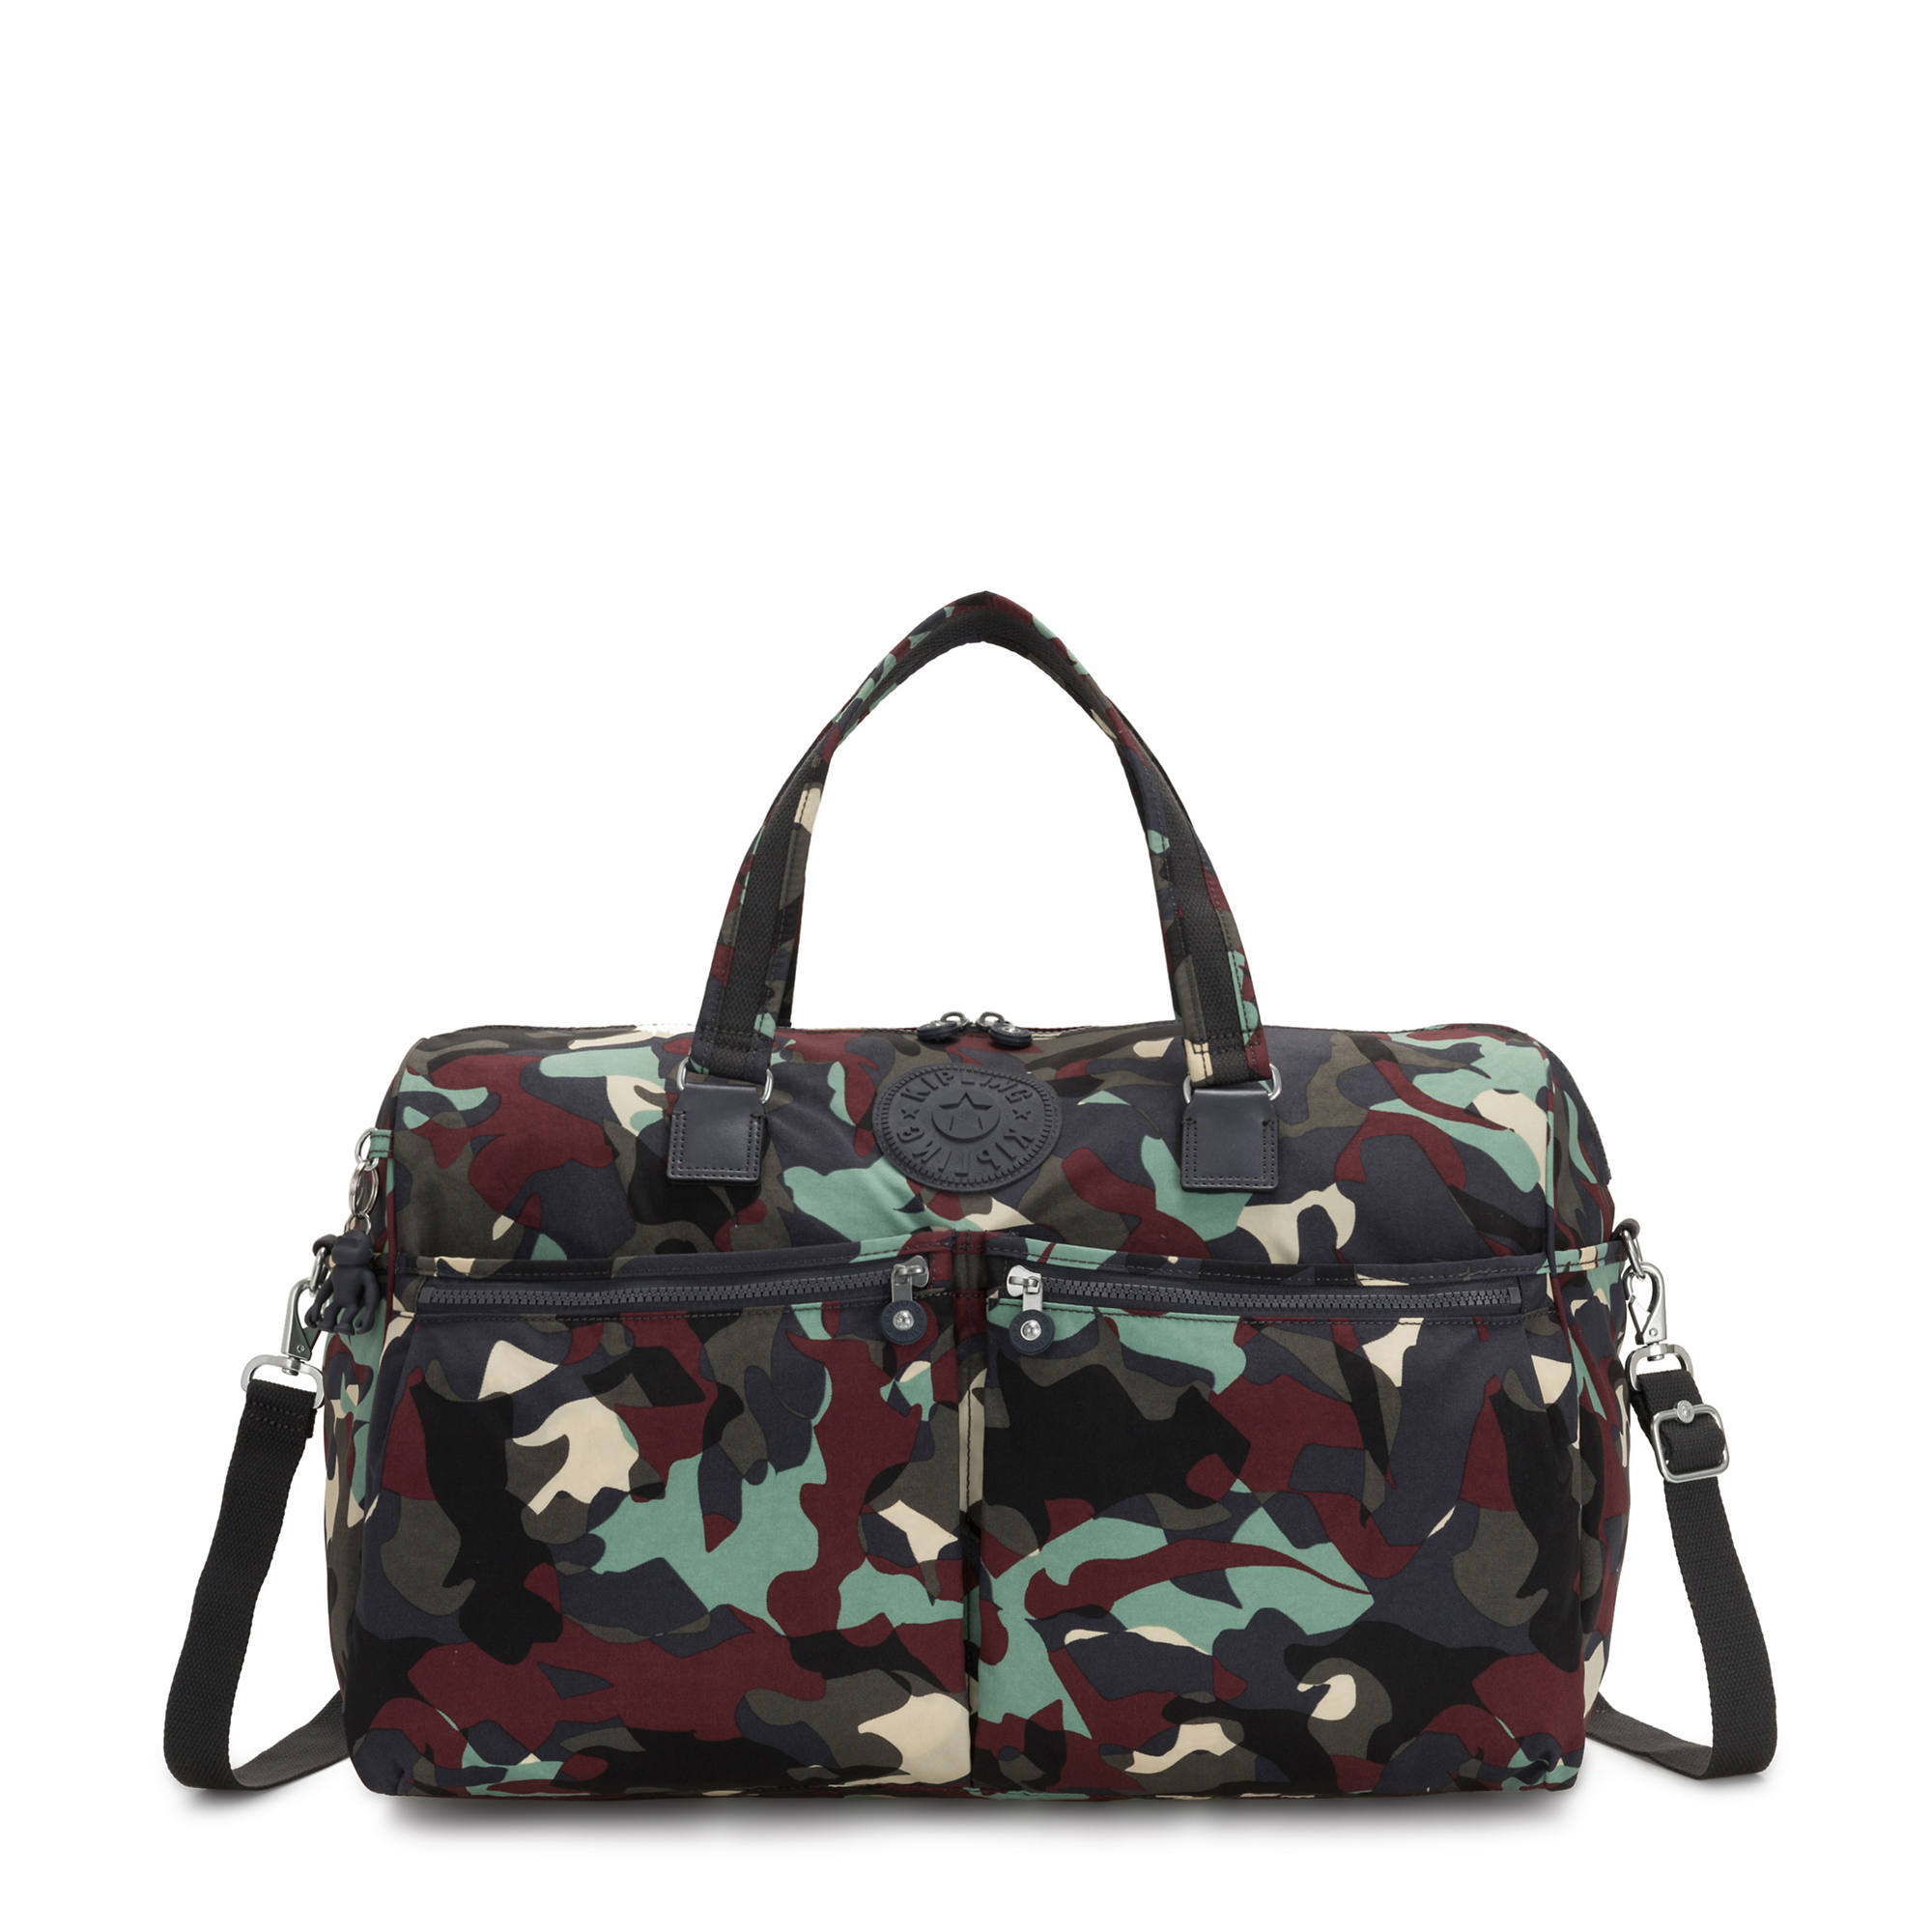 Kipling Itska Printed Duffle Bag Camo L 882256407143 | eBay